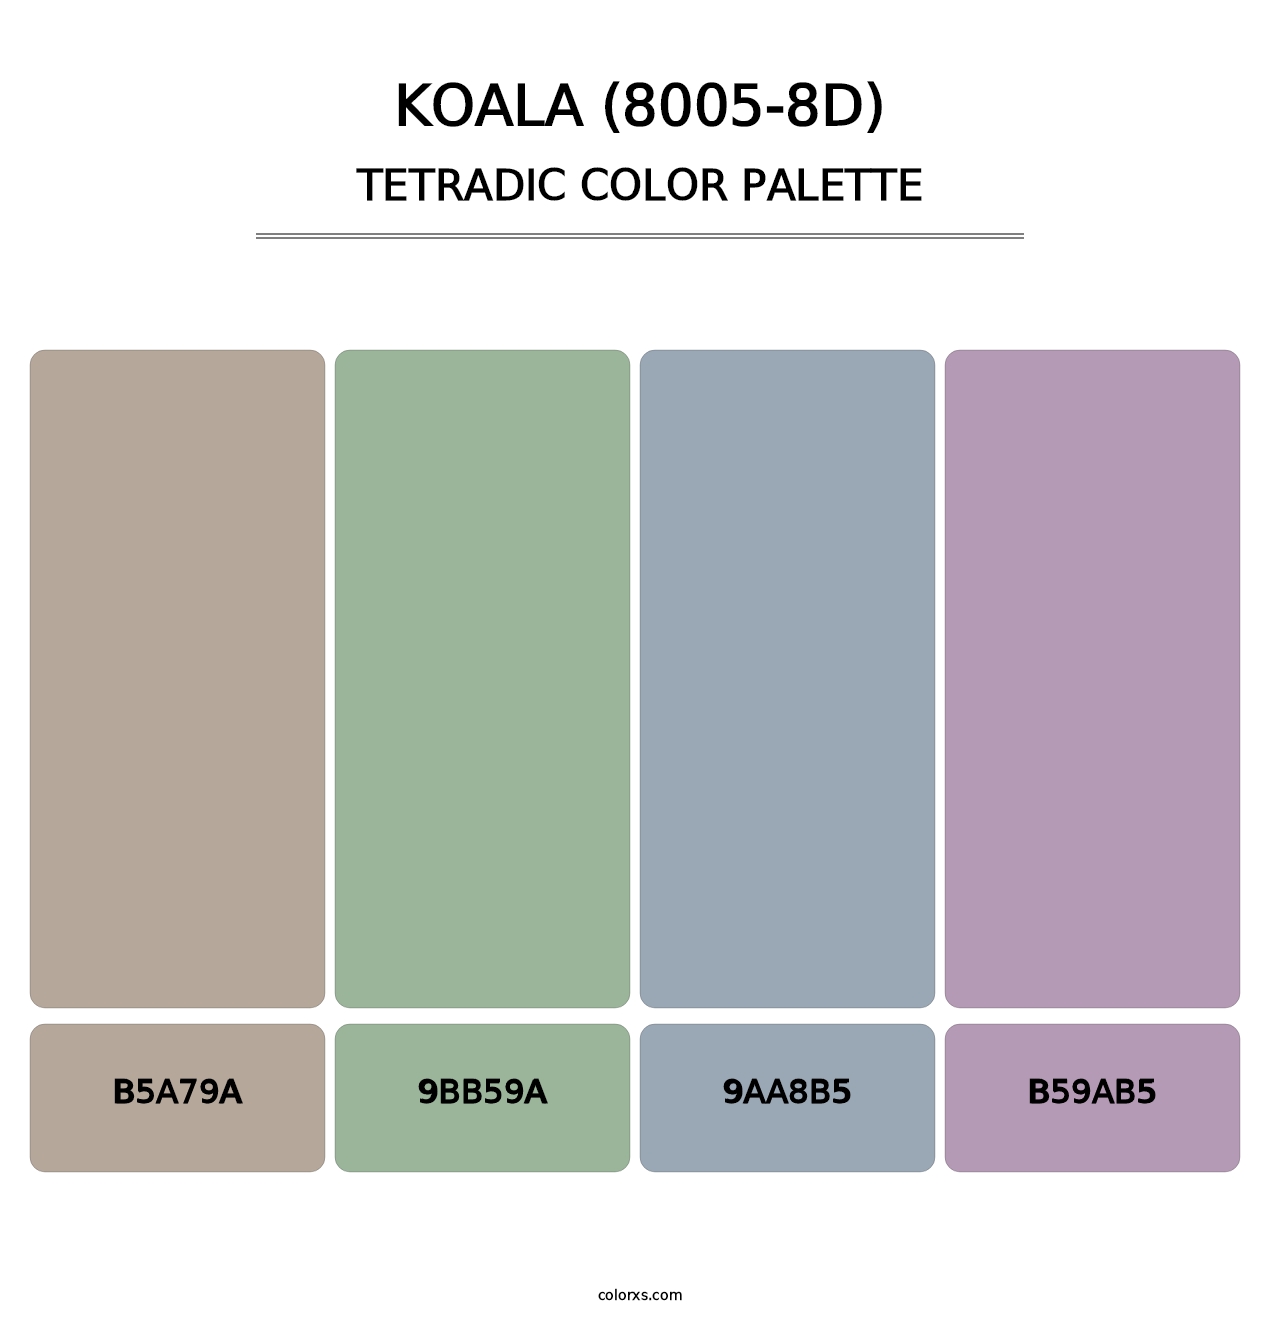 Koala (8005-8D) - Tetradic Color Palette